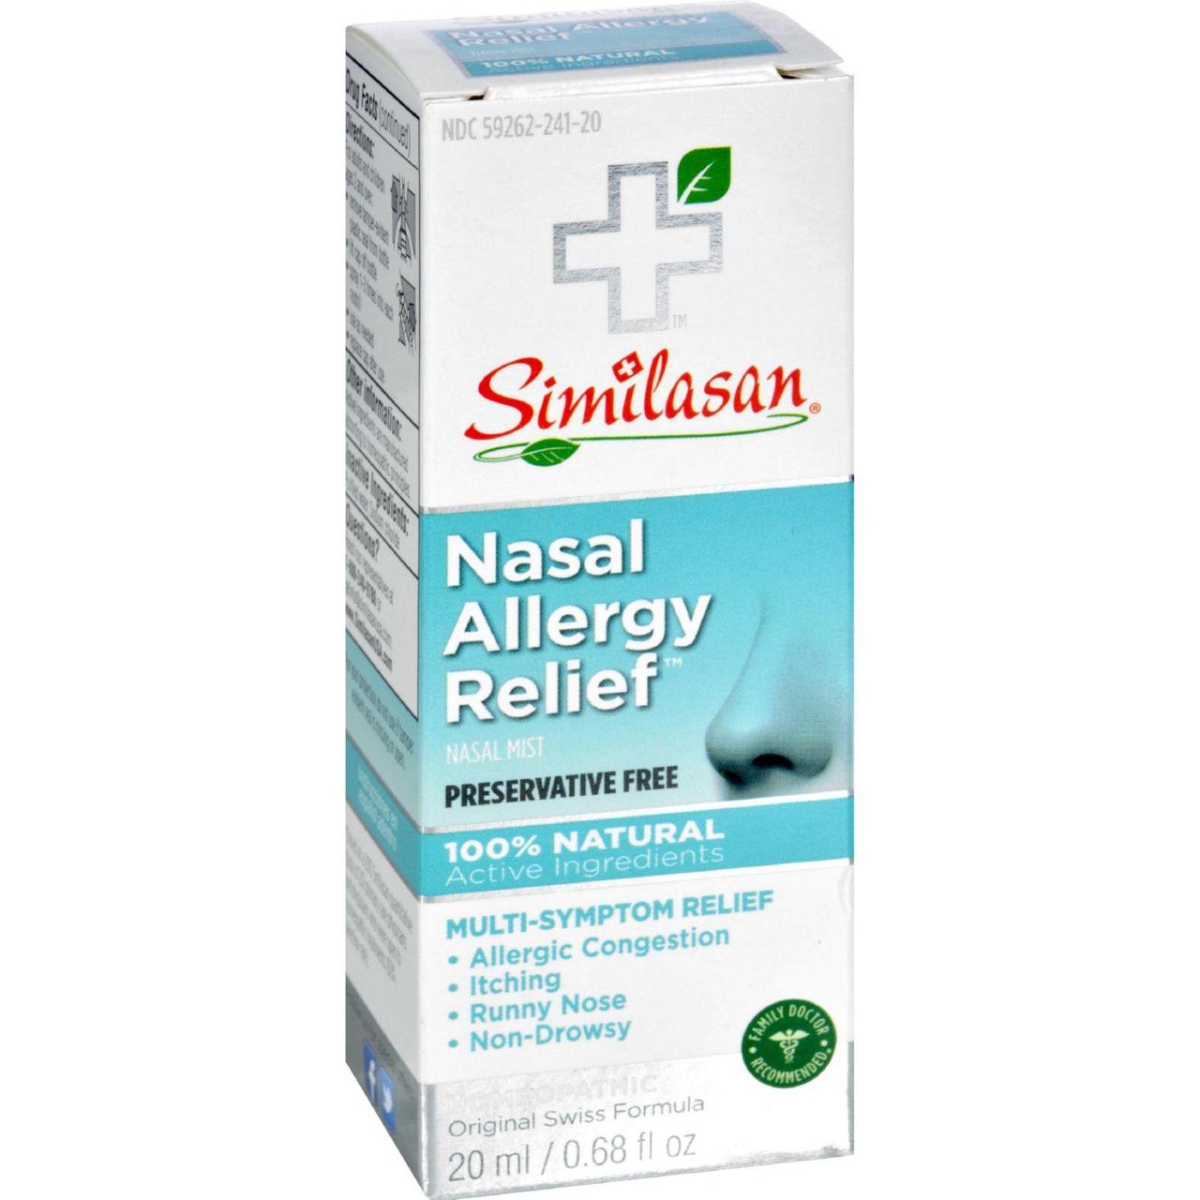 Hg0608166 0.68 Fl Oz Nasal Allergy Relief